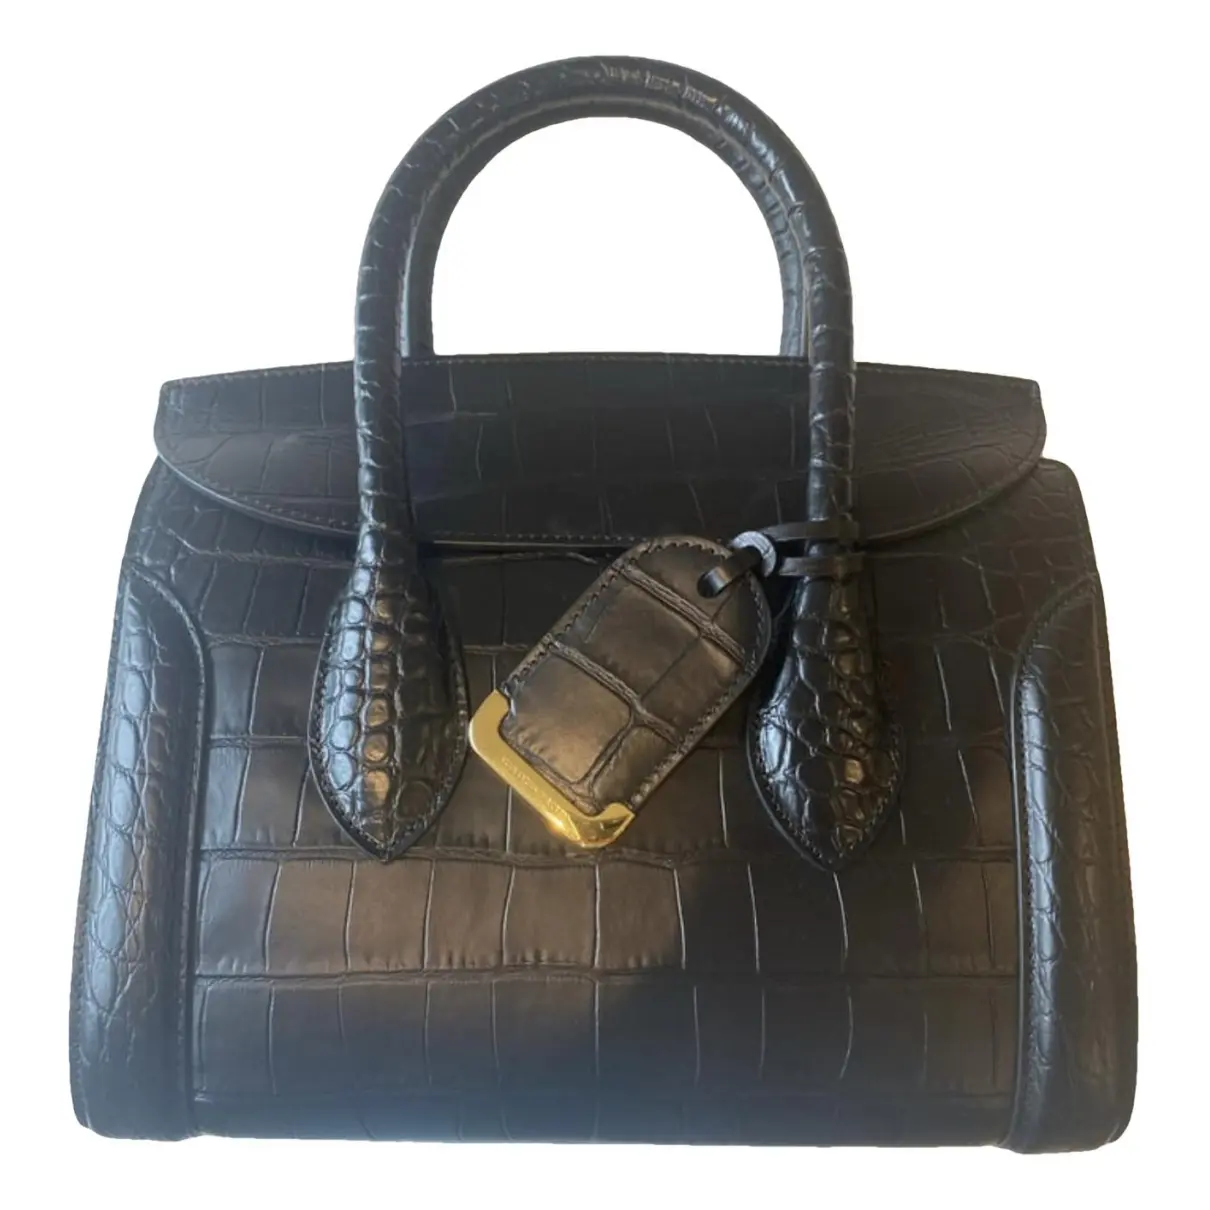 Heroine leather handbag